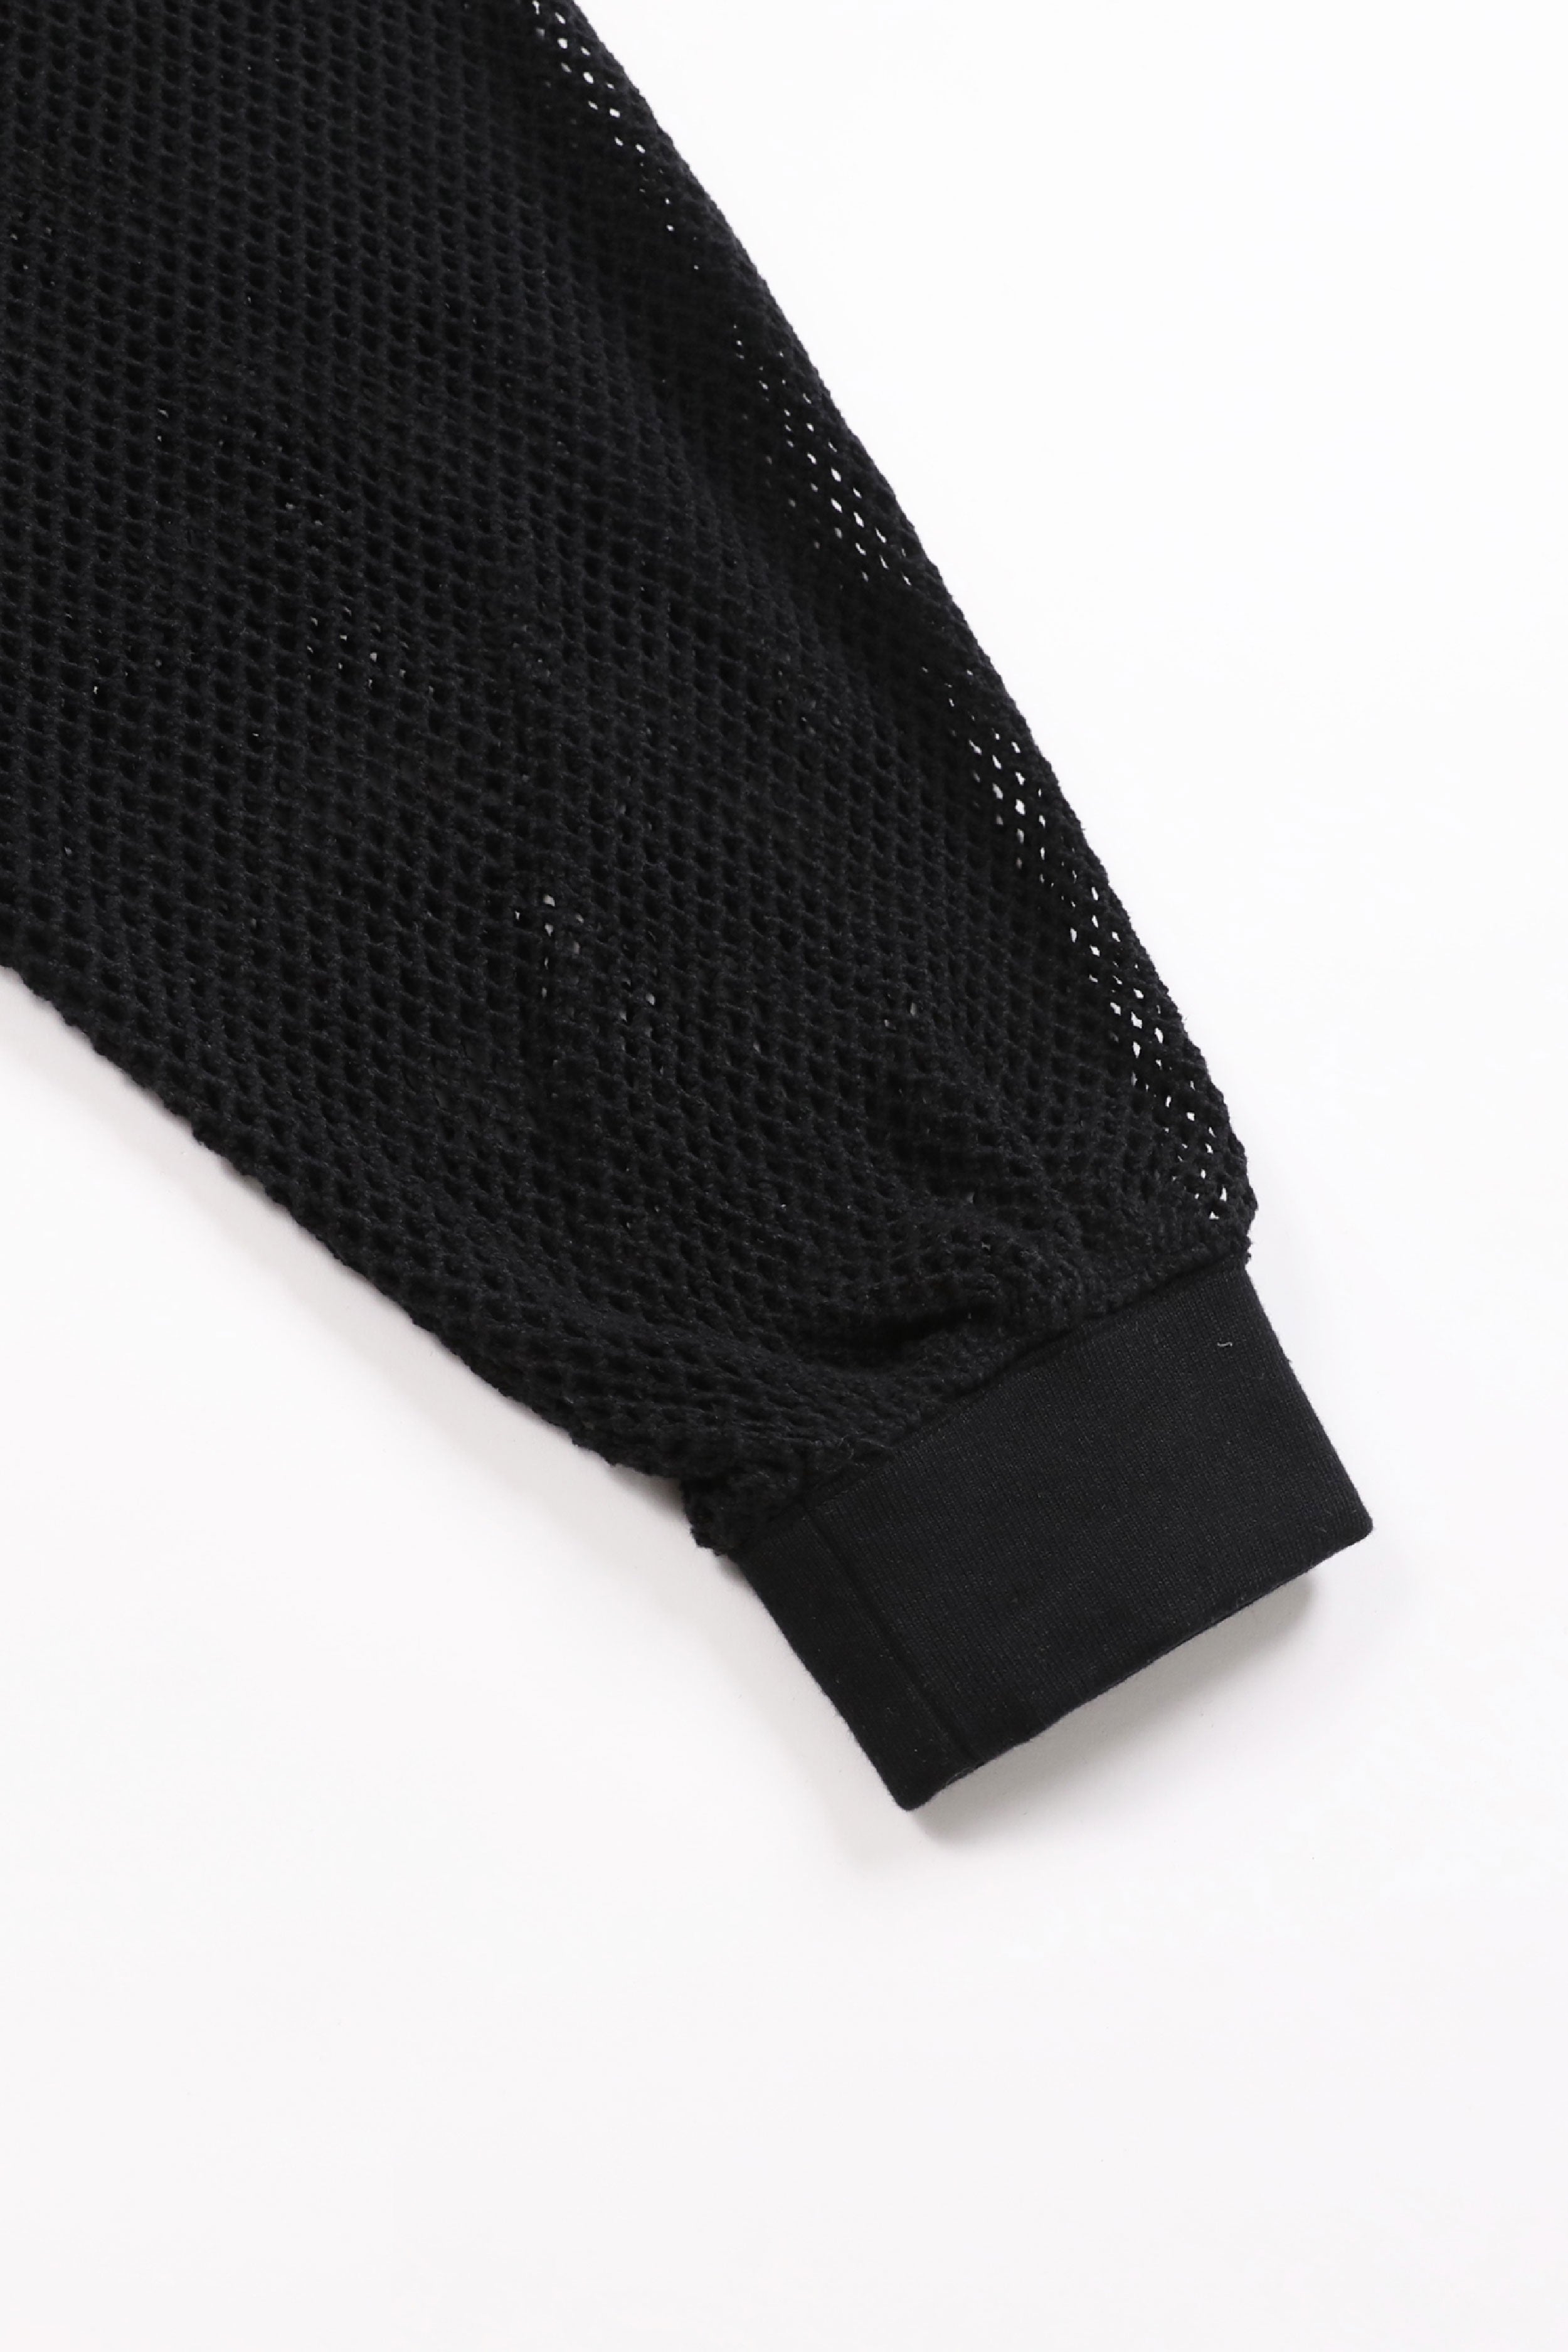 Badblood Fleur Crochet Knit Hood Zip-up Large Fit Black